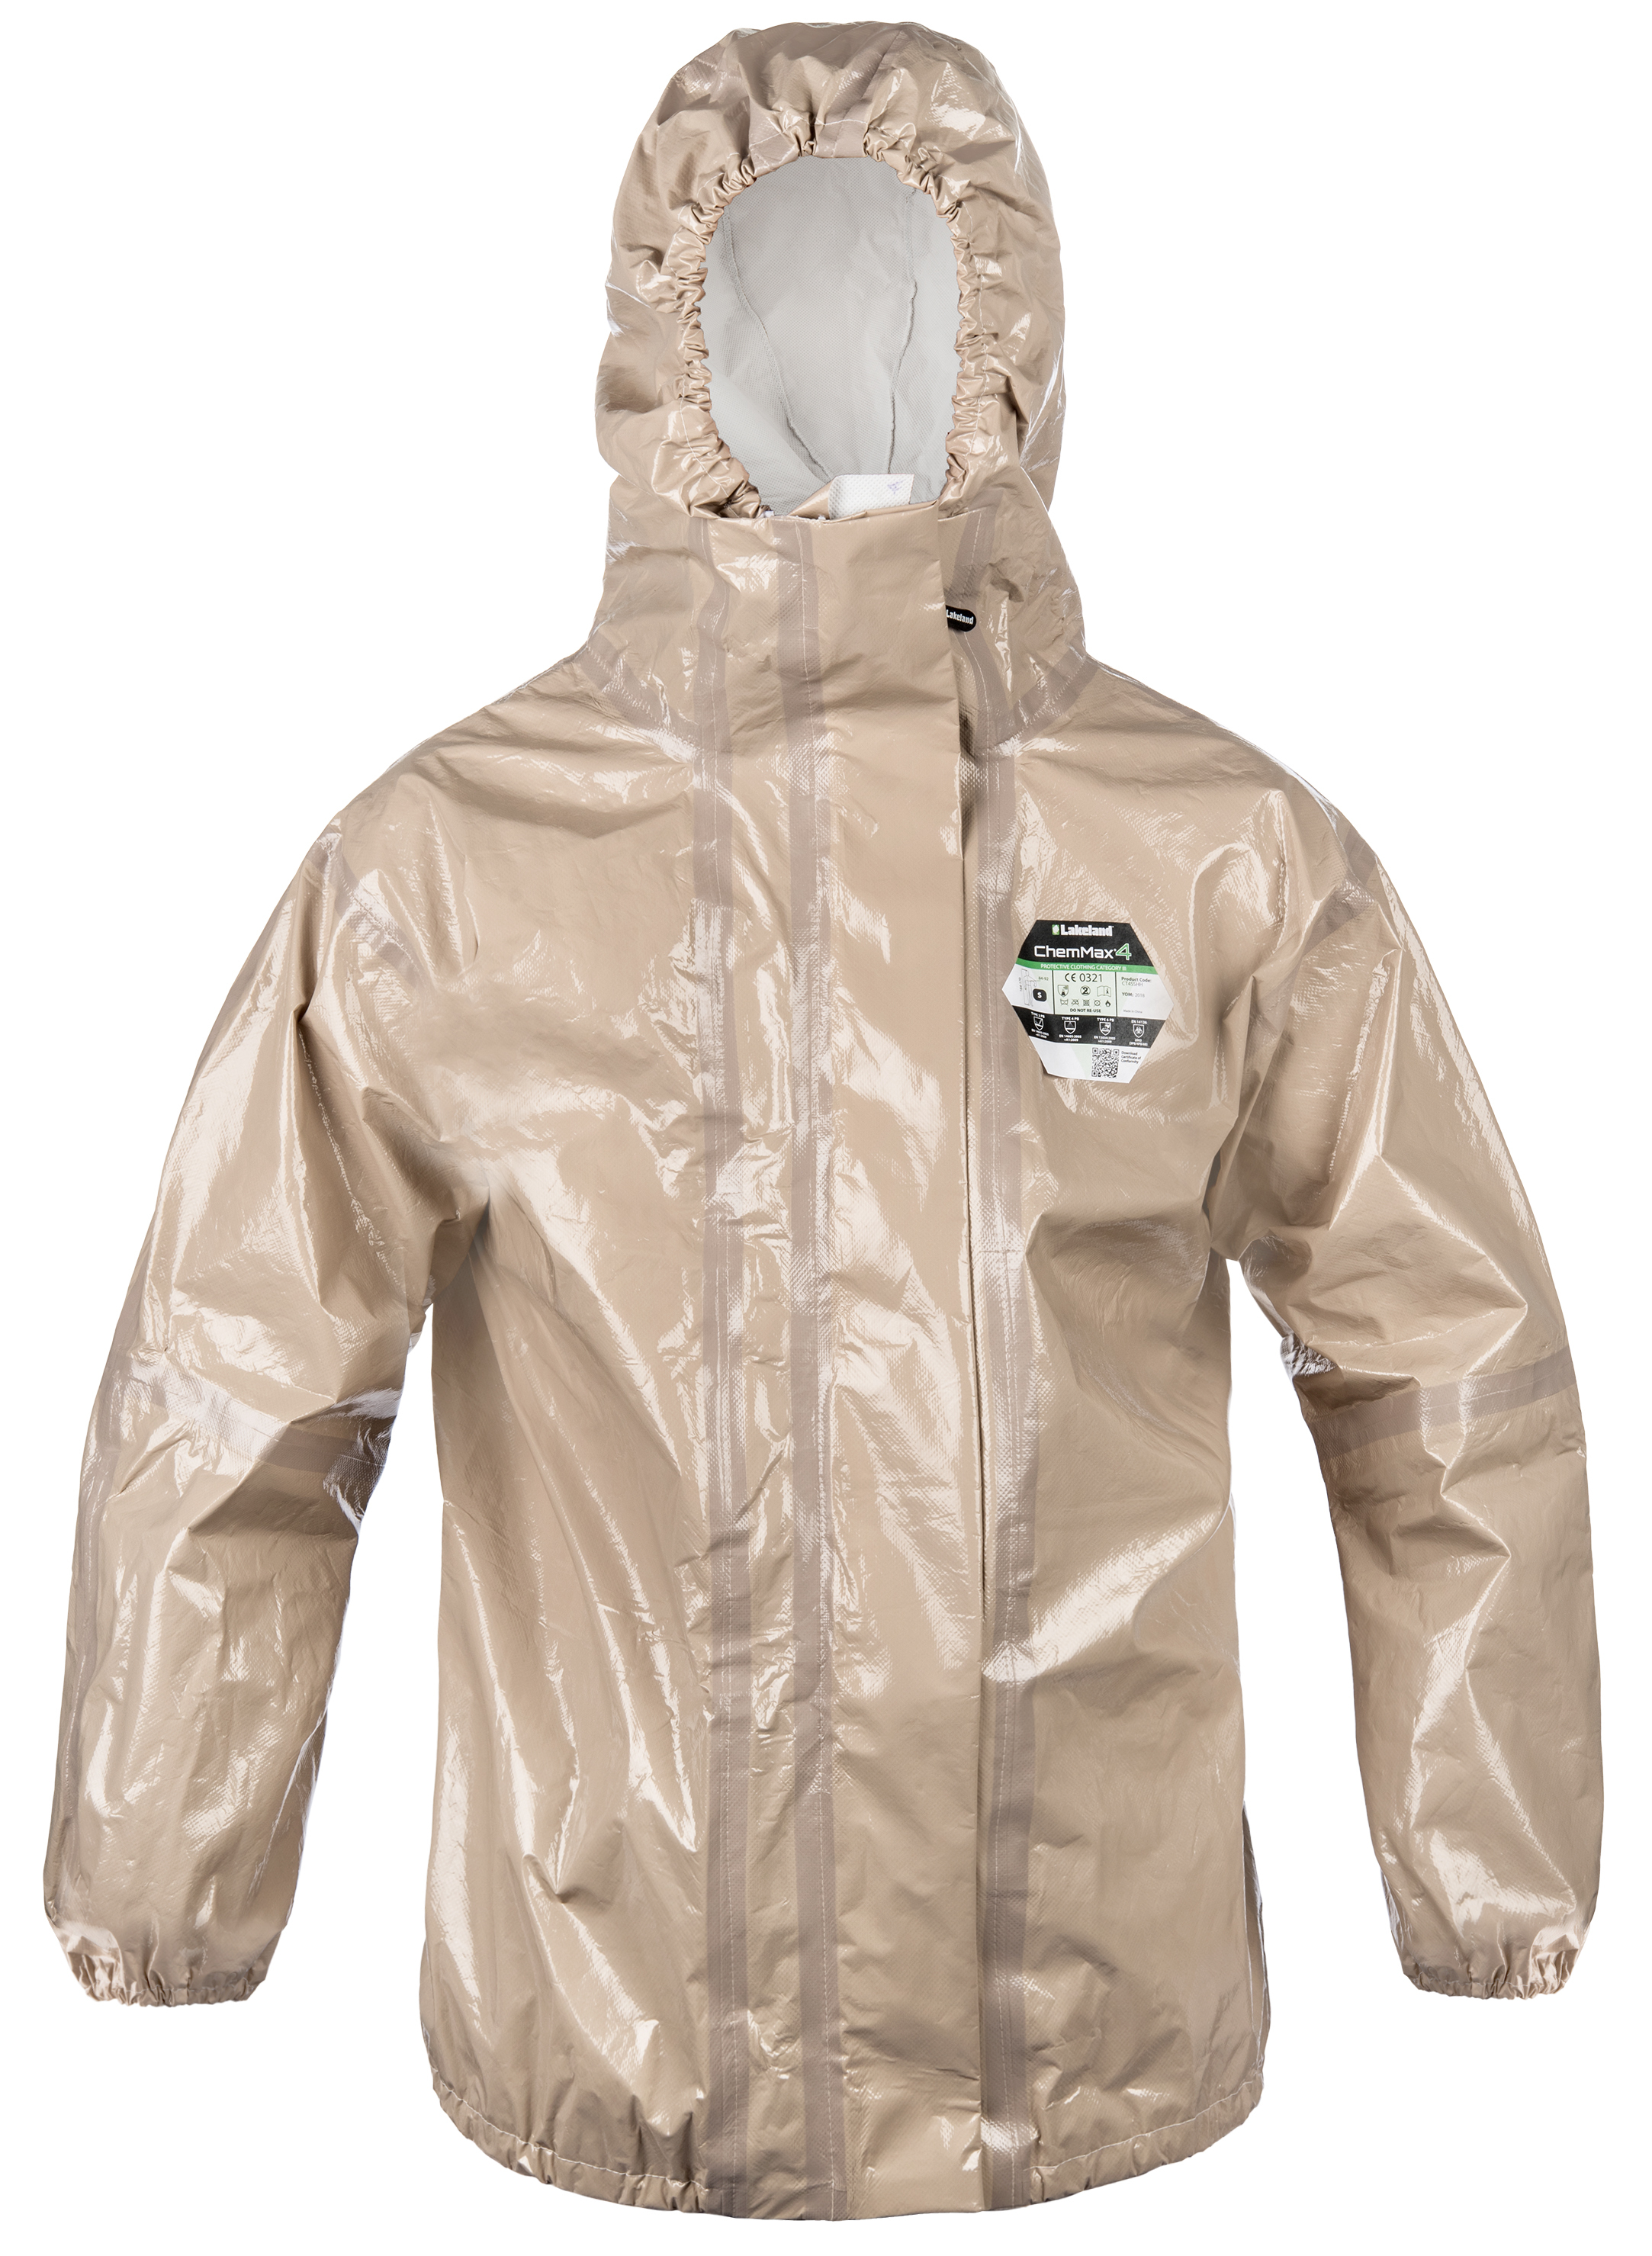 ChemMax® 4 Plus Jacket with double zip & storm flap front… | Lakeland